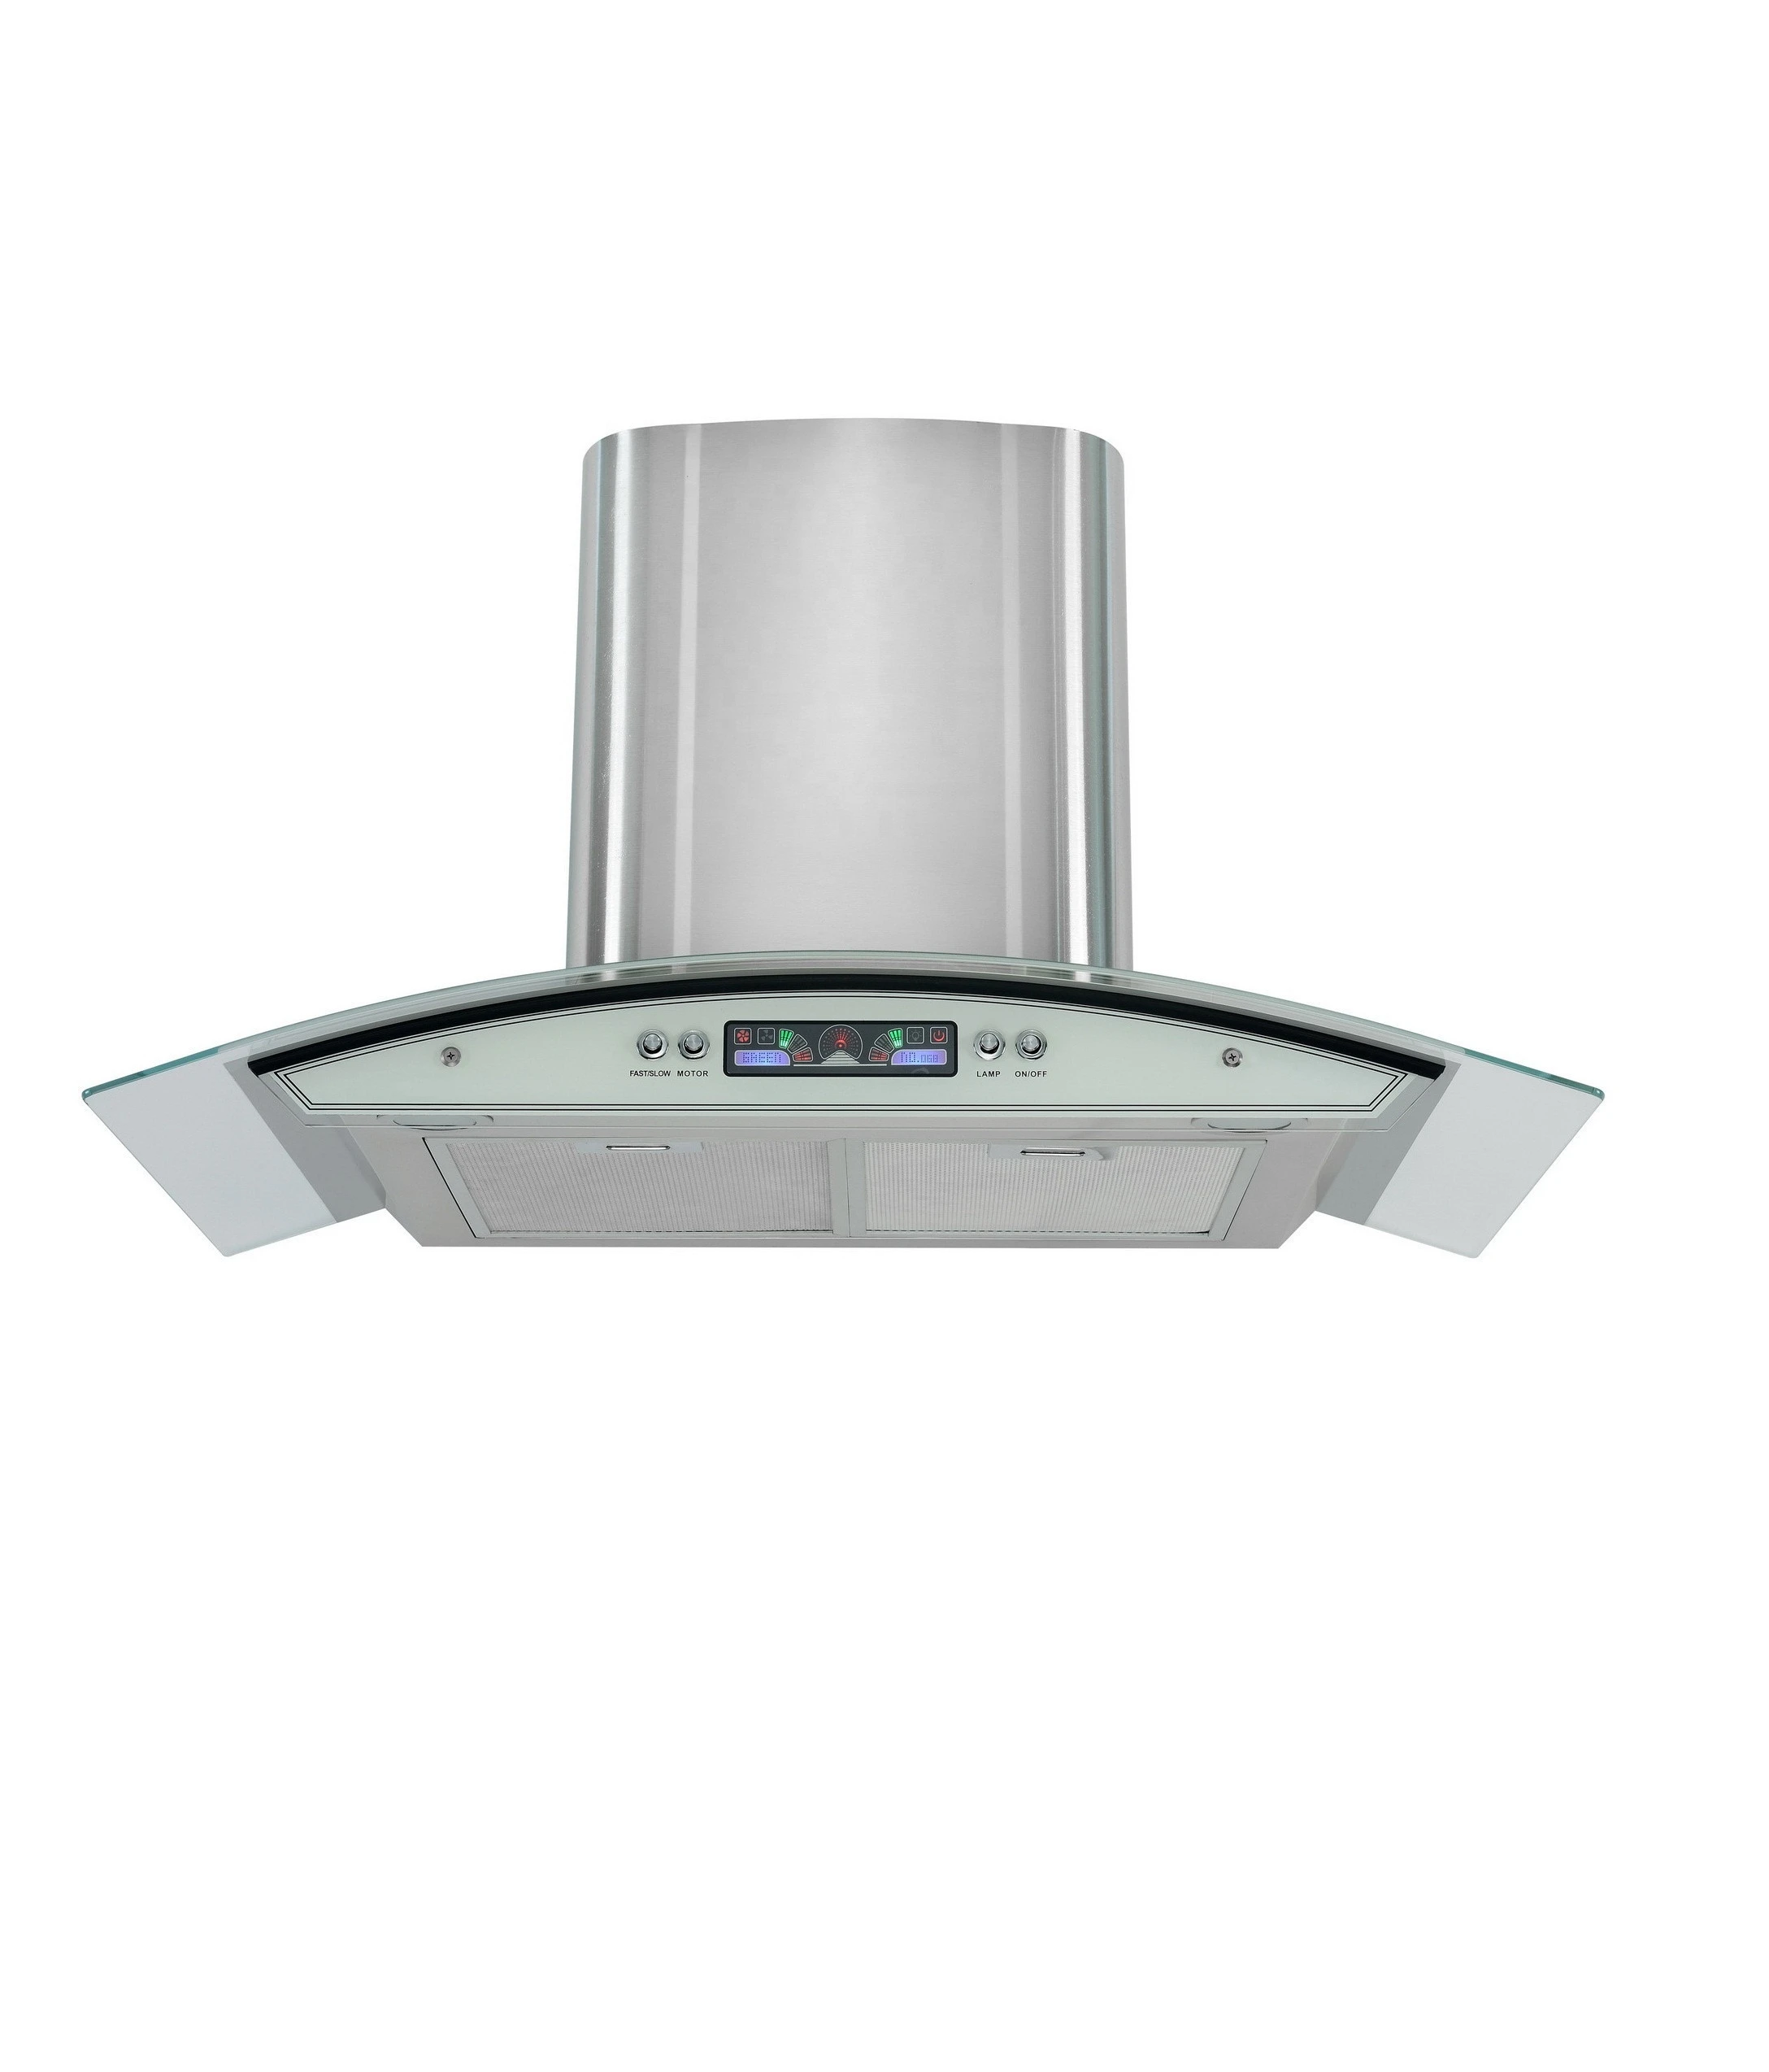 Euro style Stainless Steel Inox 900mm kitchen smoke extractor fan cooker range hood